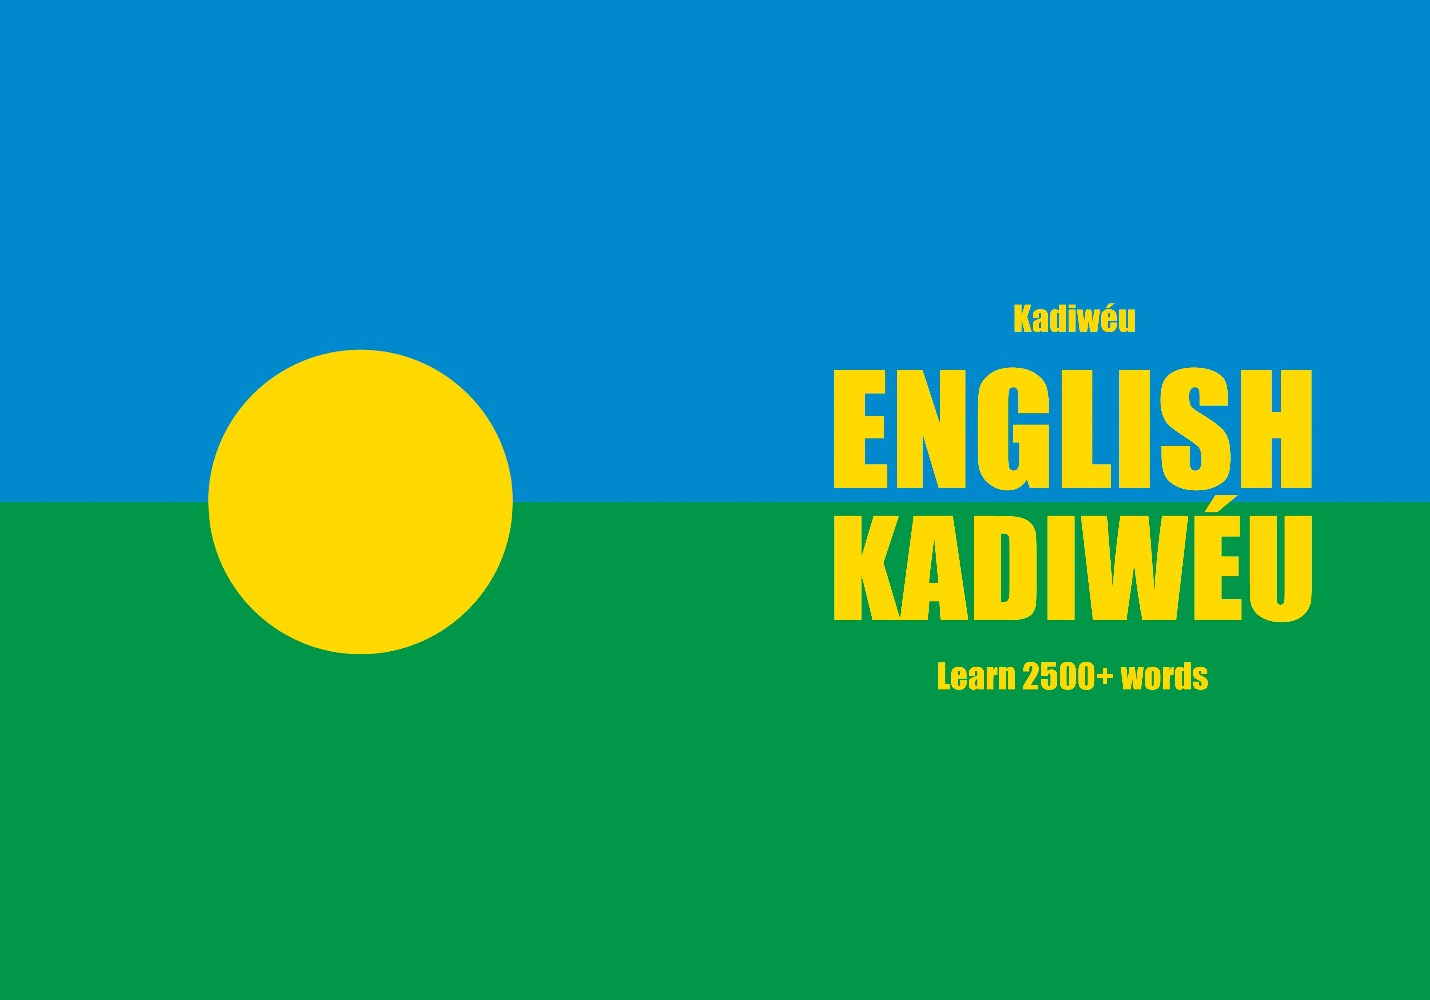 Kadiweu language learning notebook cover